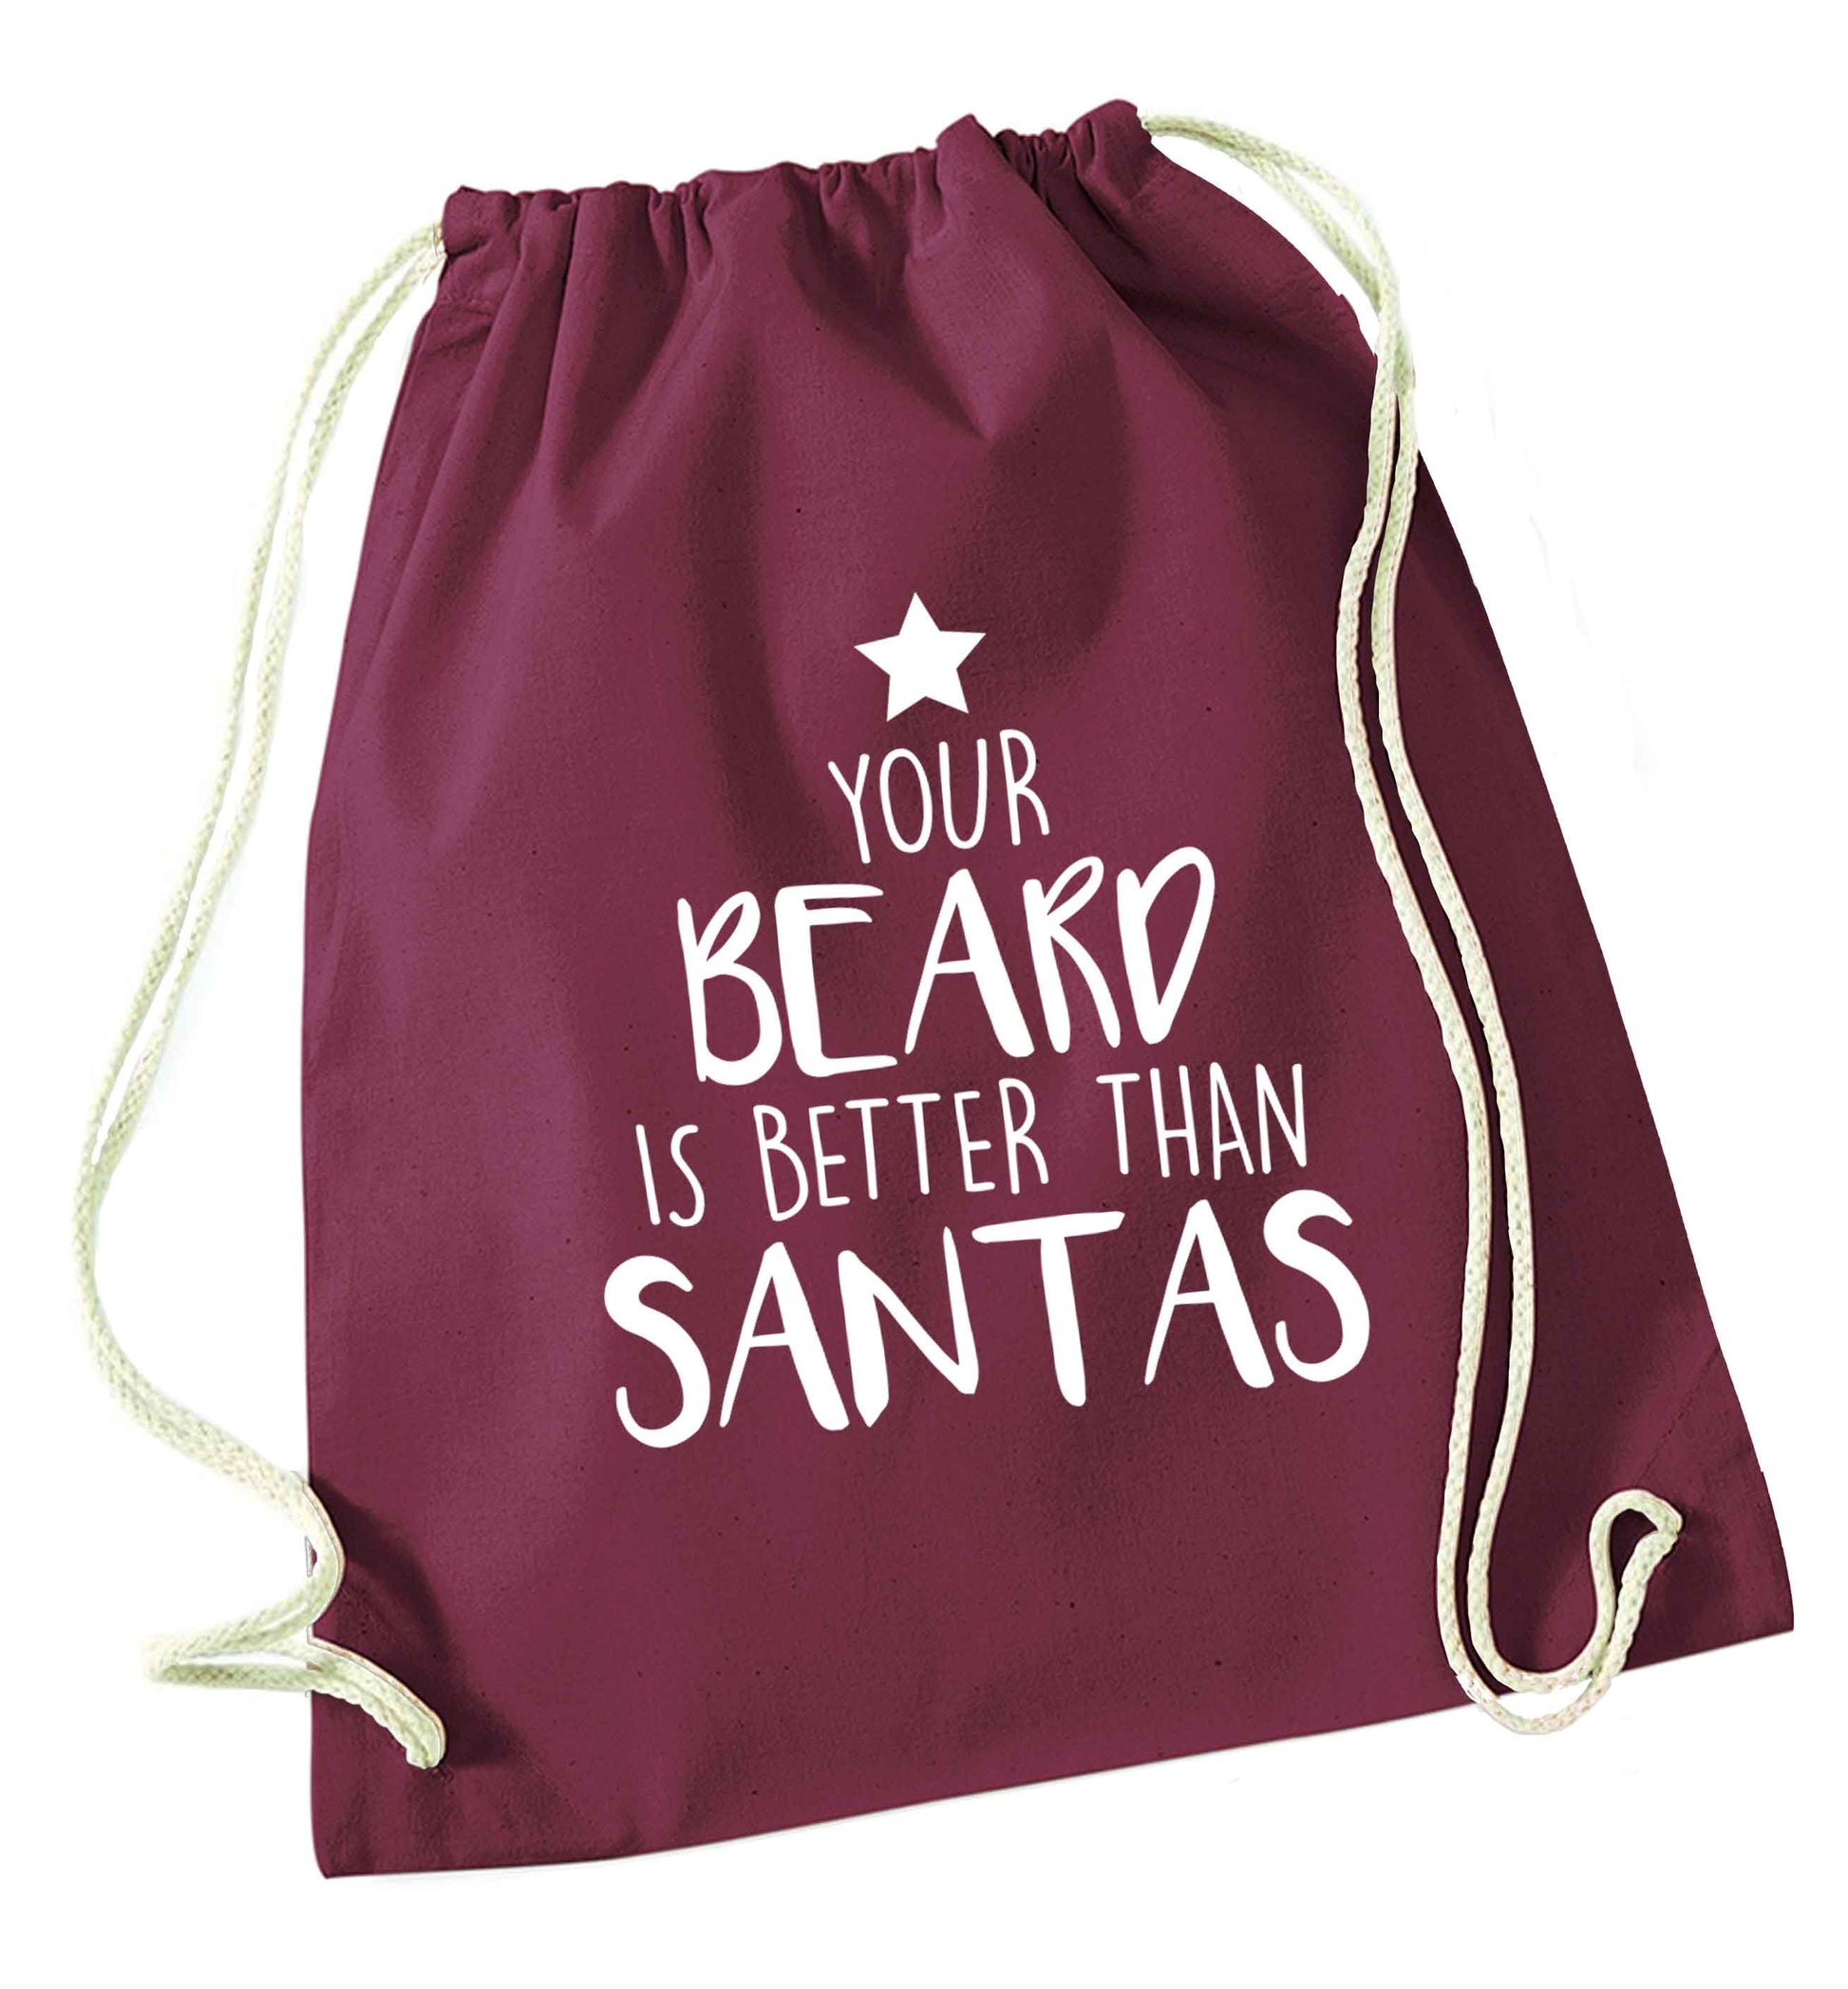 Your Beard Better than Santas maroon drawstring bag